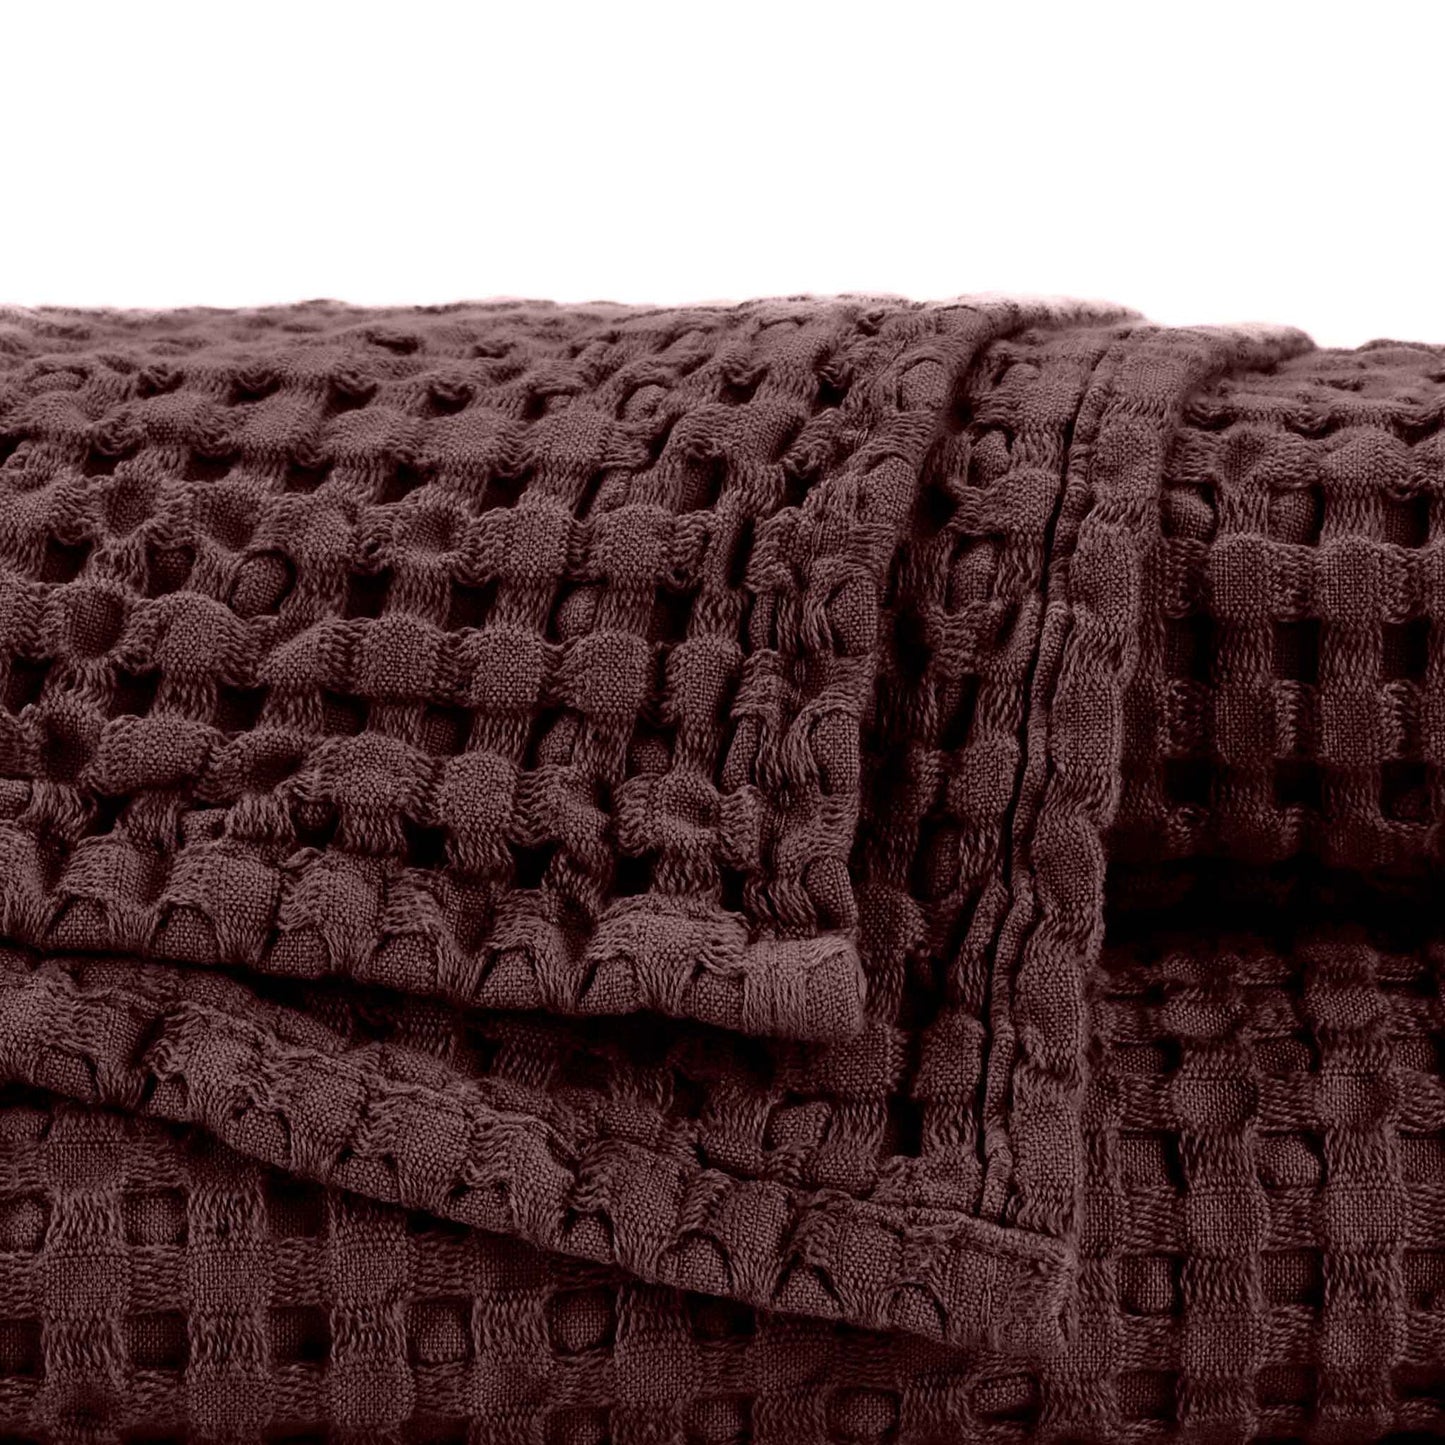 Pousada Egyptian Cotton Towels - 509 Vineyard - |VESIMI Design| Luxury and Rustic bathrooms online